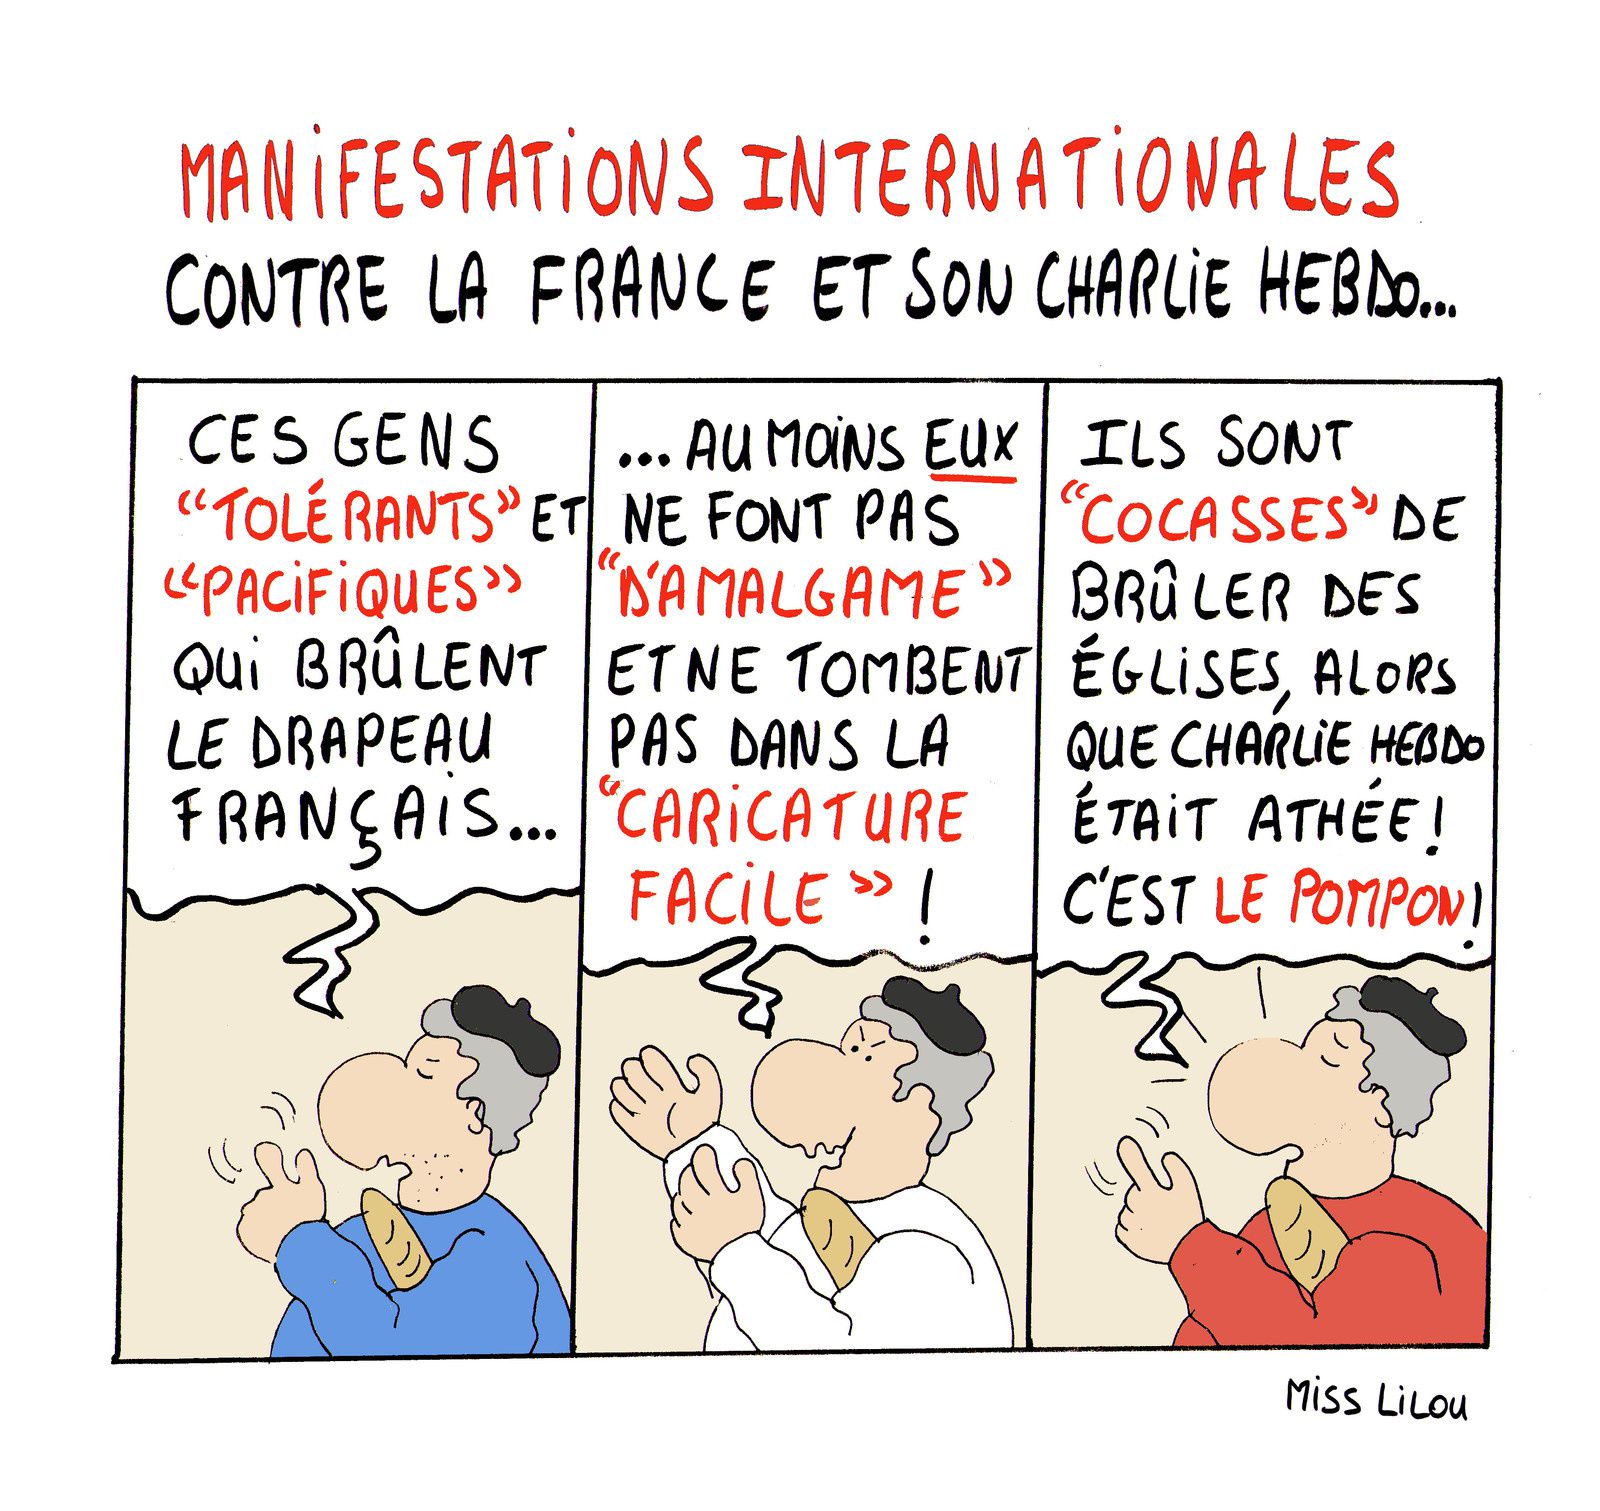 MANIFESTATIONS INTERNATIONALES CONTRE LA FRANCE ET SON CHARLIE HEBDO...